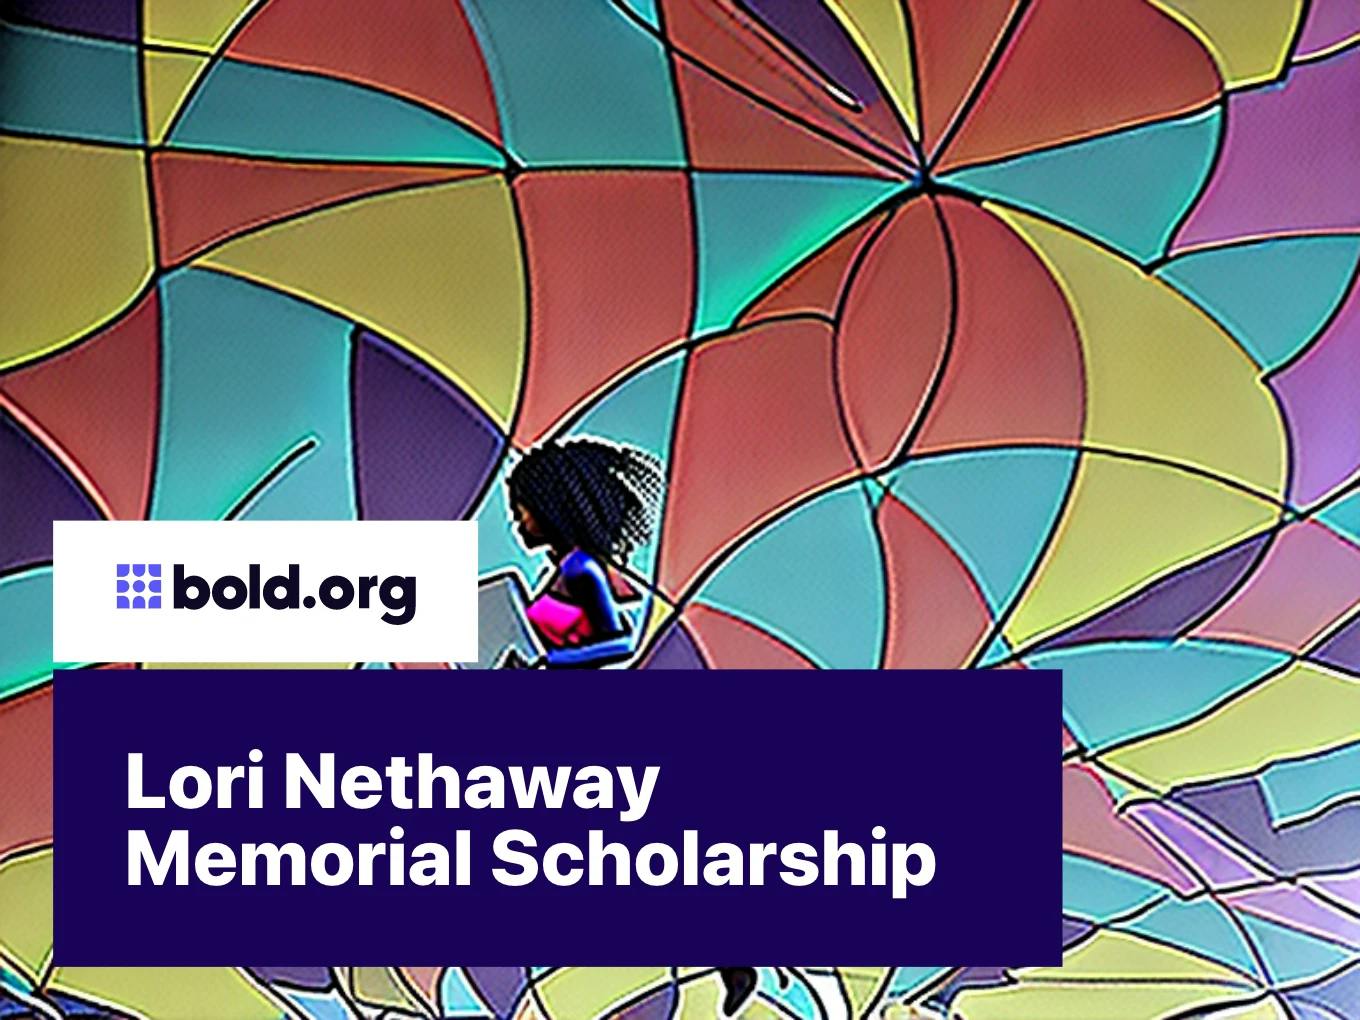 Lori Nethaway Memorial Scholarship